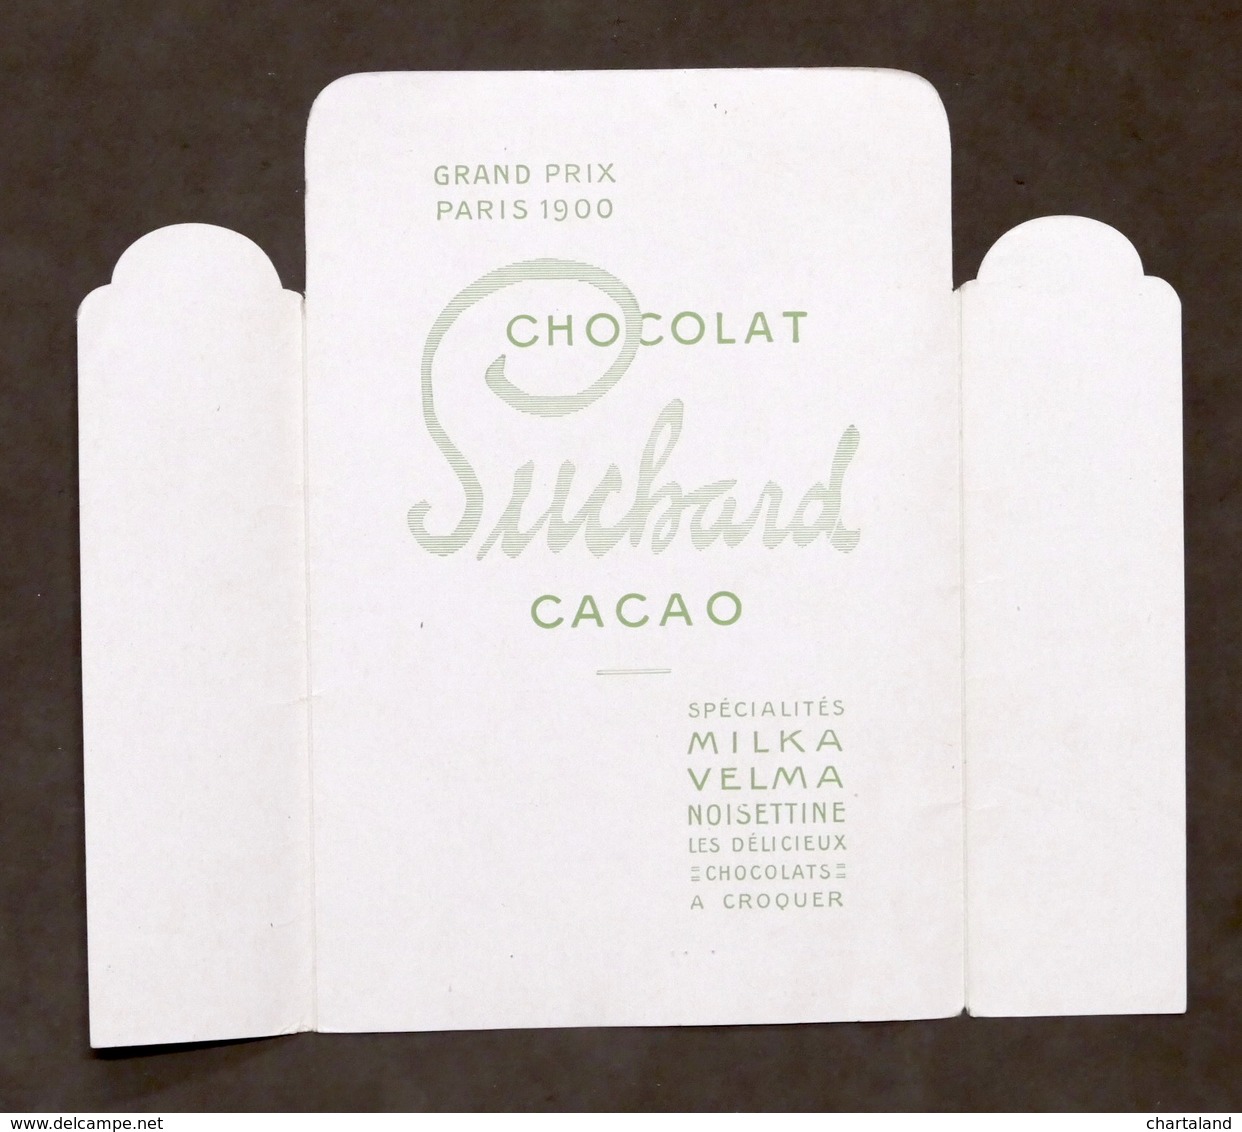 Collezionismo Menu - Suchard Chocolat Cacao - Milka Velma - 1914 - Menu